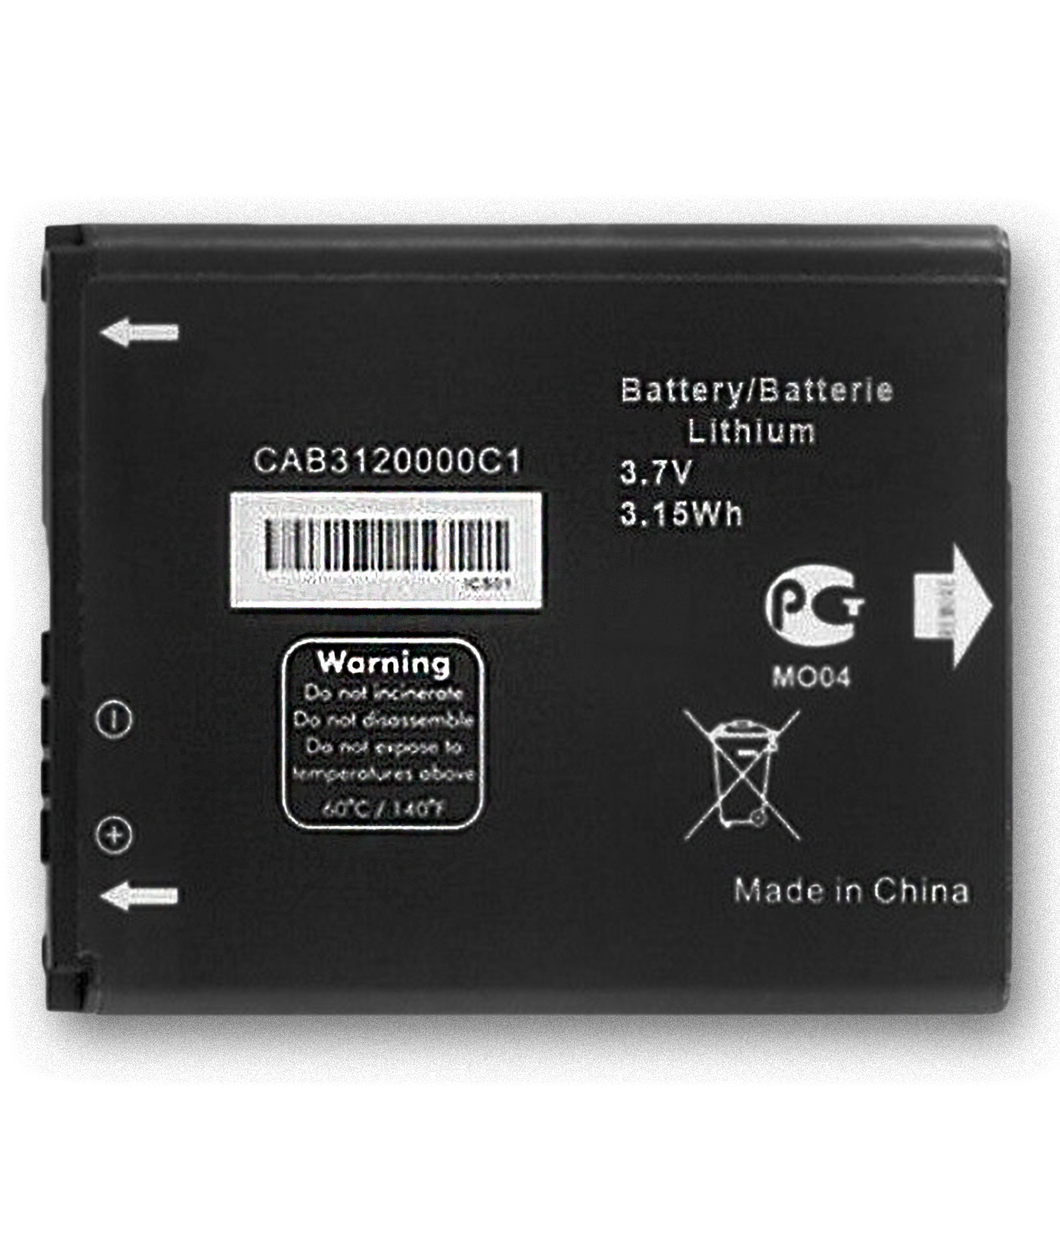 Replacement Battery for Alcatel 768 CAB3120000C1/ OT880/ OT875